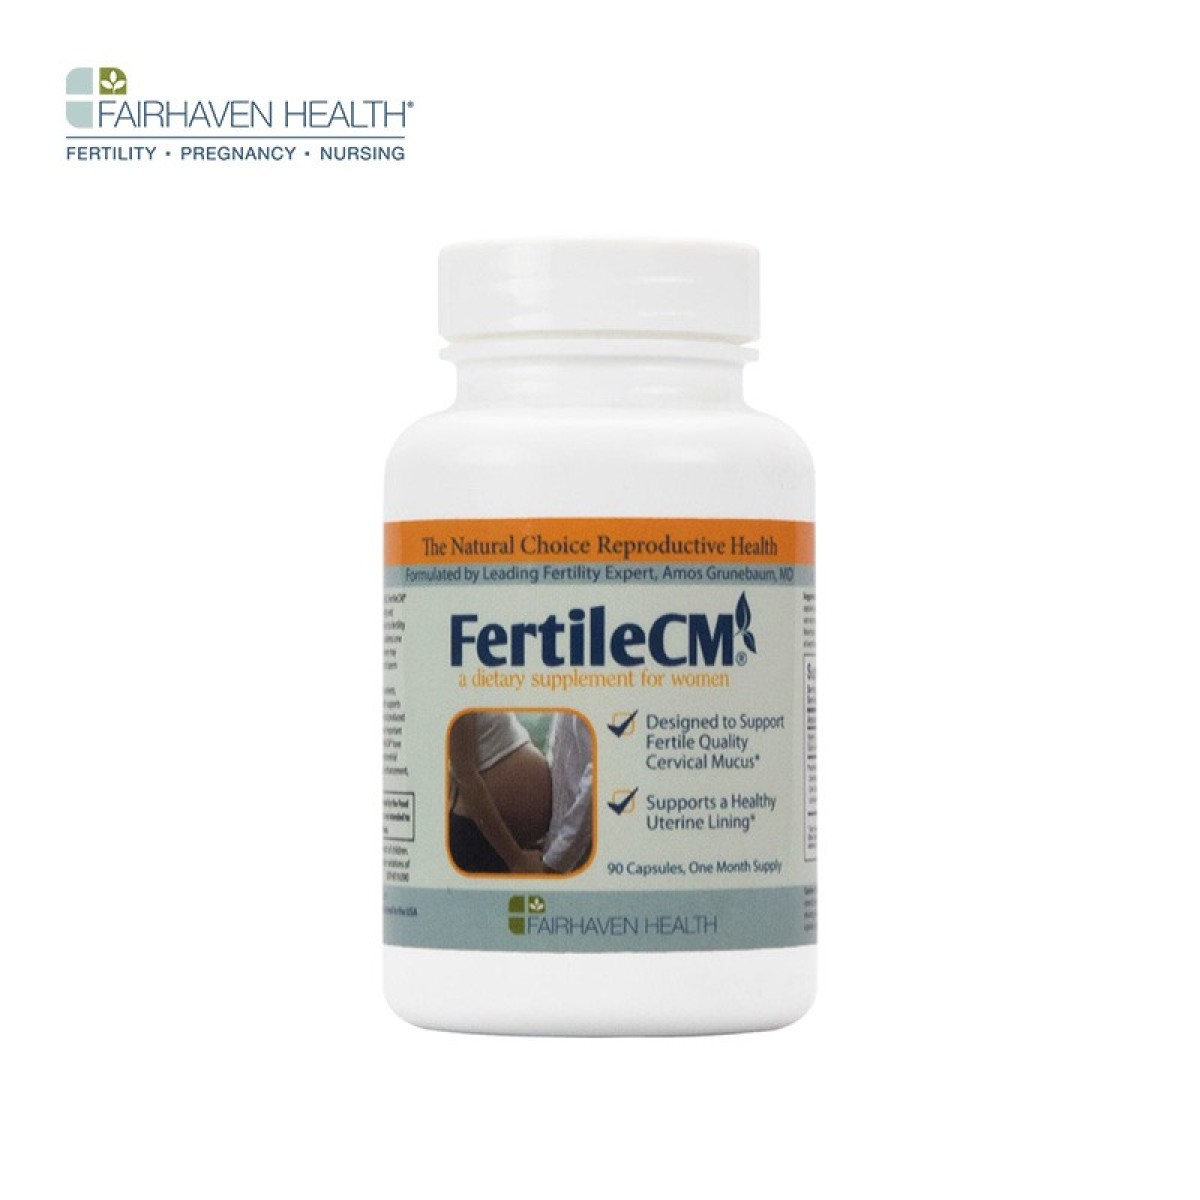 Fairhaven Health 生育補充劑 - FertileCM For Women 草本潤滑丸(90粒) FertileCM Cervical Mucus Supplement